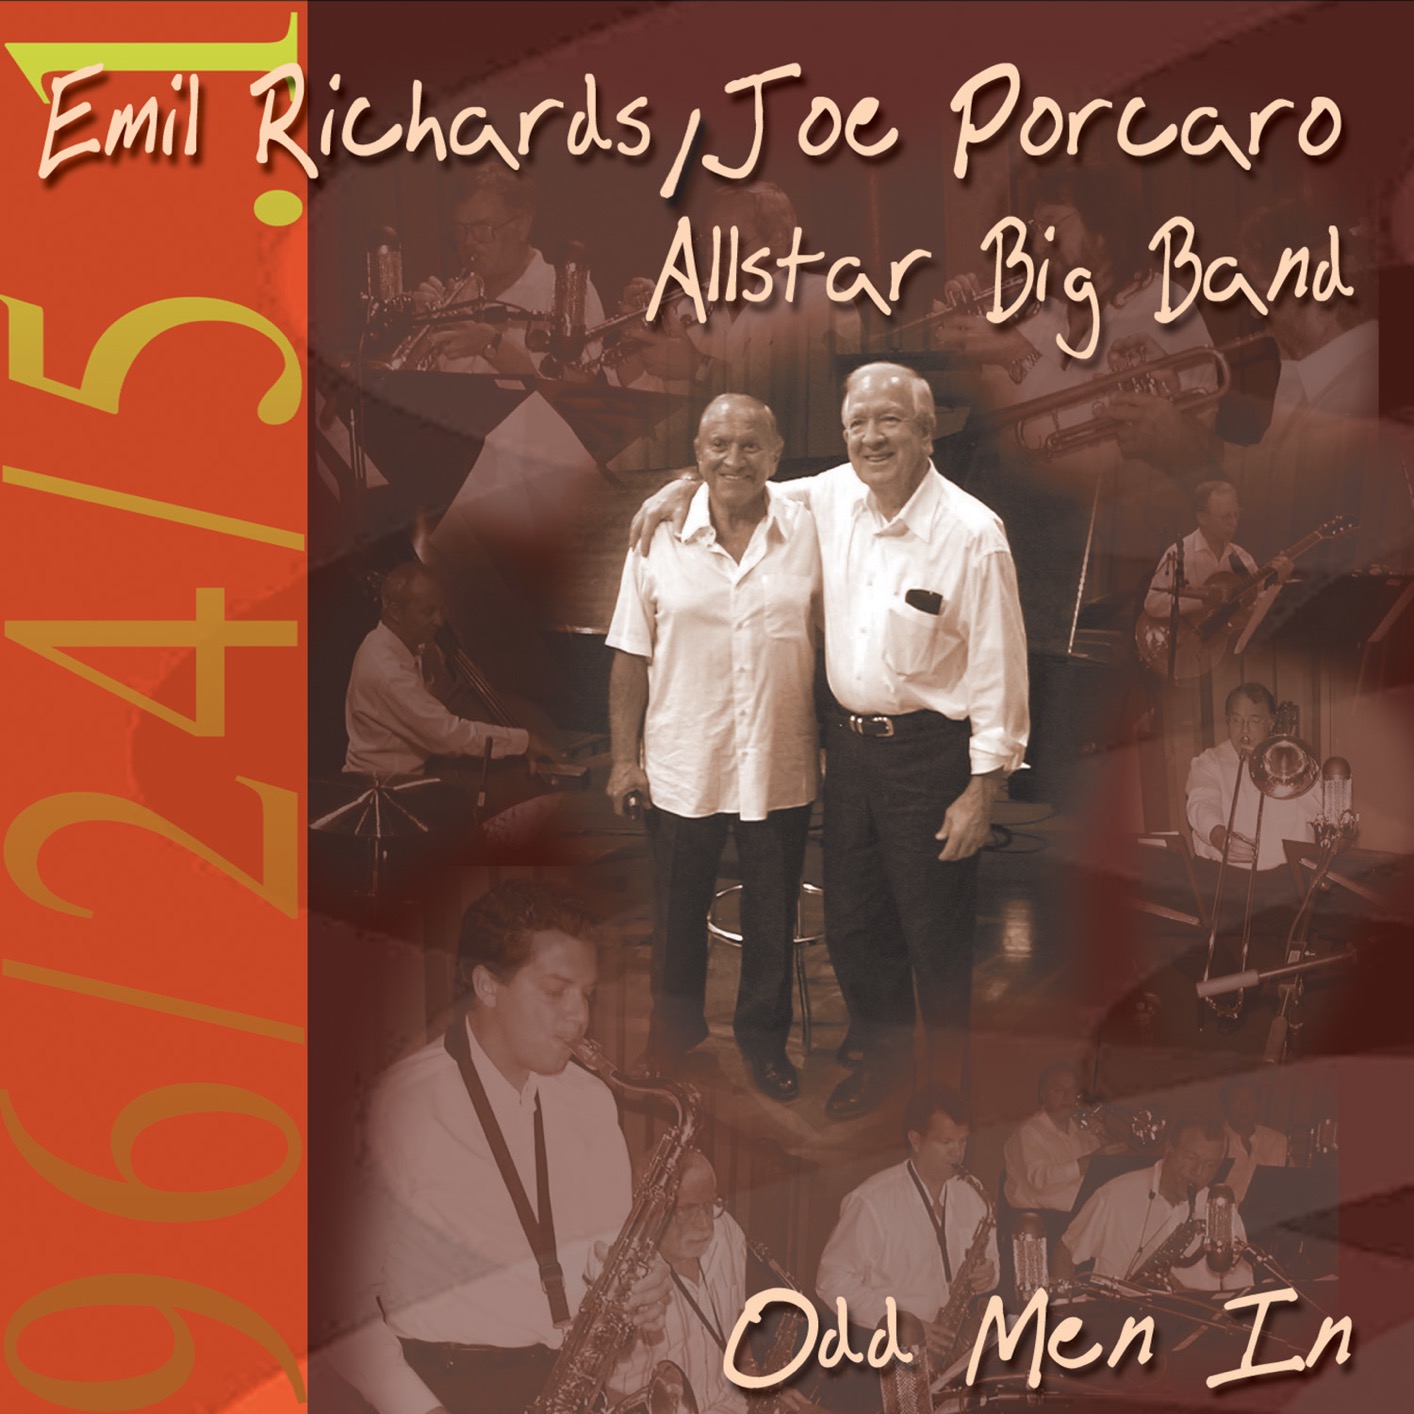 Emil Richards & Joe Porcaro All Star Big Band – Odd Men In (2006/2020) [FLAC 24bit/96kHz]